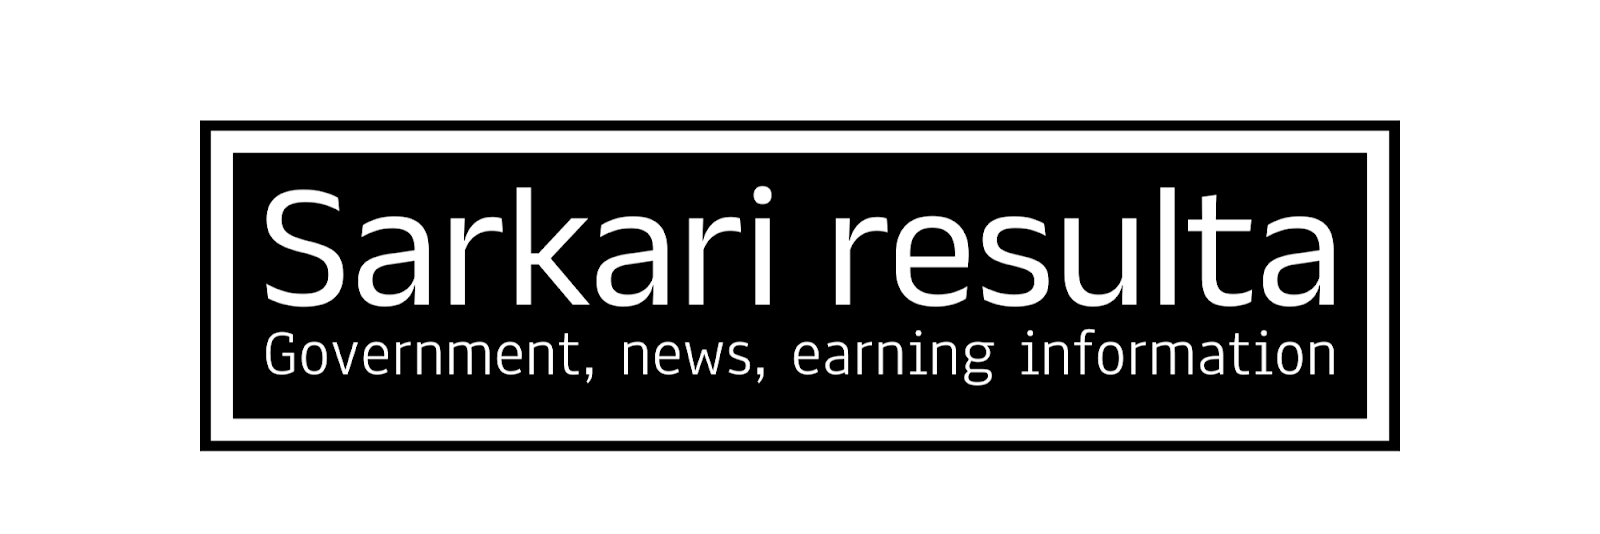 Sarkari result - Free job alert, Education